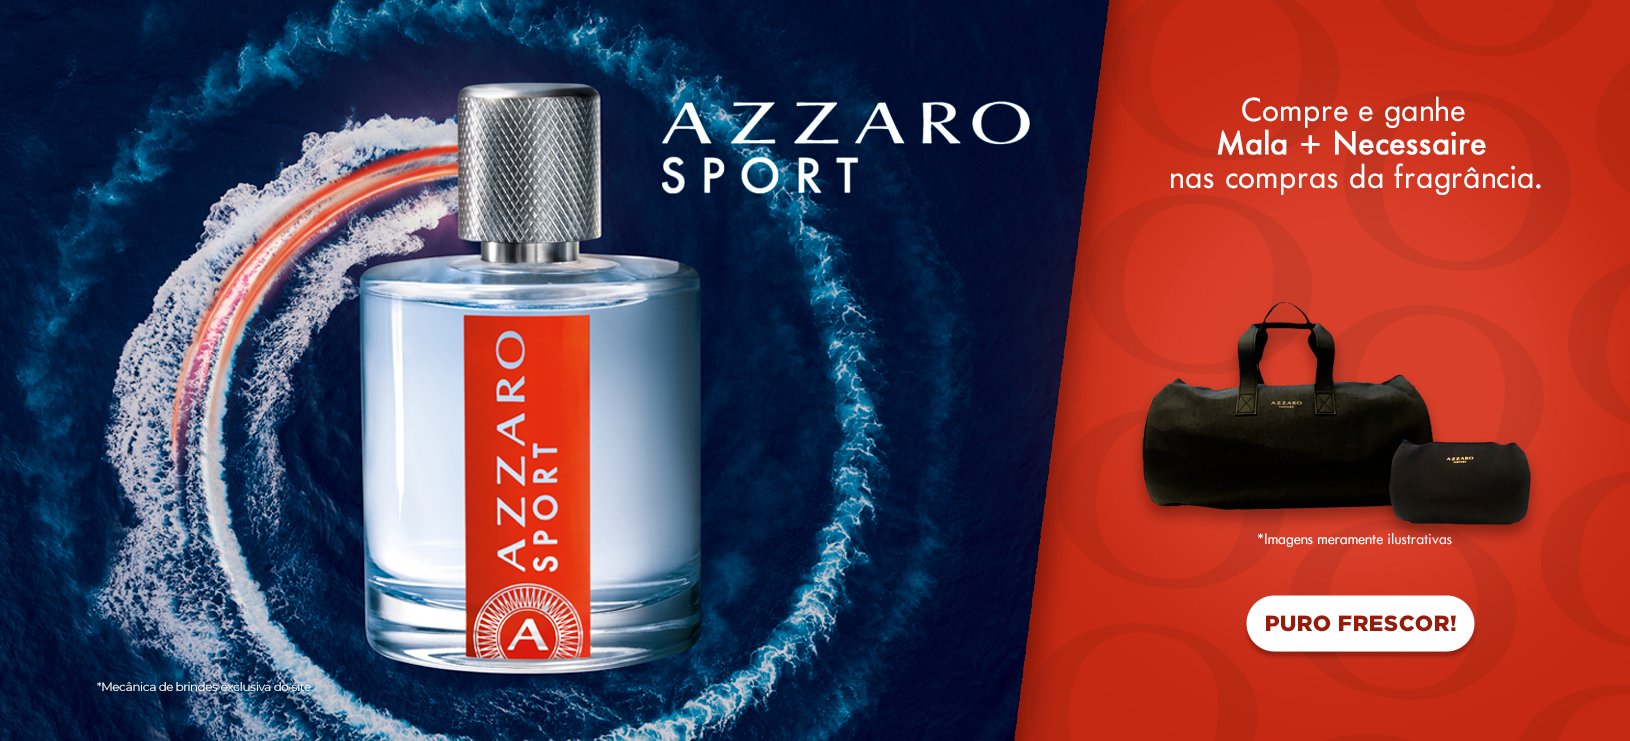 azzaro-sport-banner-desktop